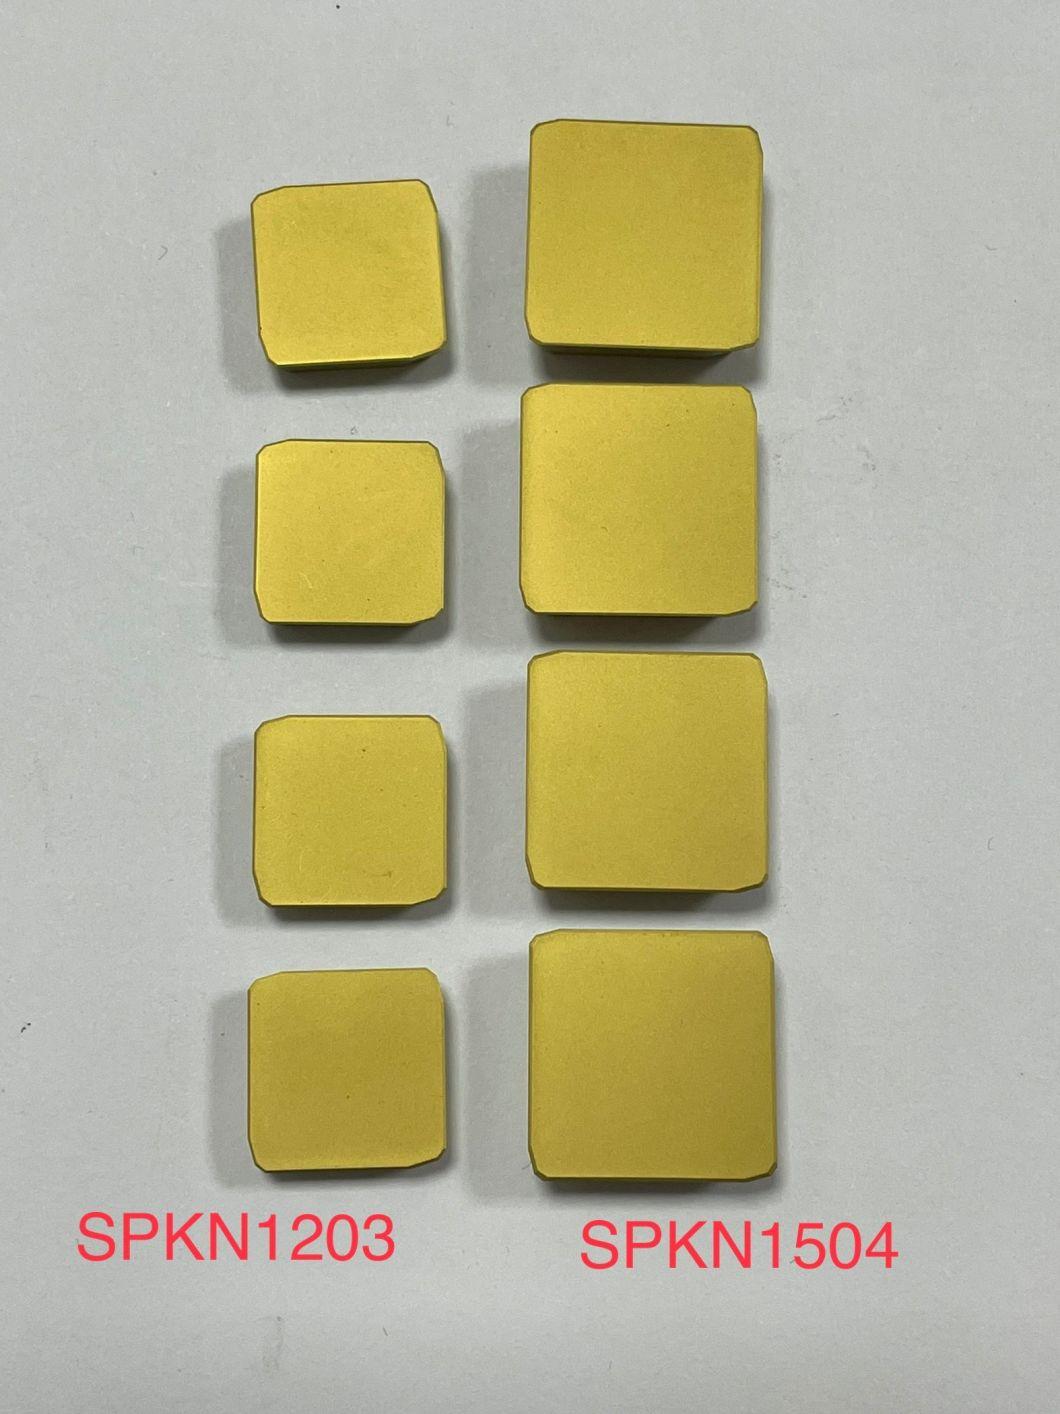 Various Kind of Milling Inserts Snmx/Apkt/Spkn/Tpkn /Lumn Carbide CNC Cutting Inserts